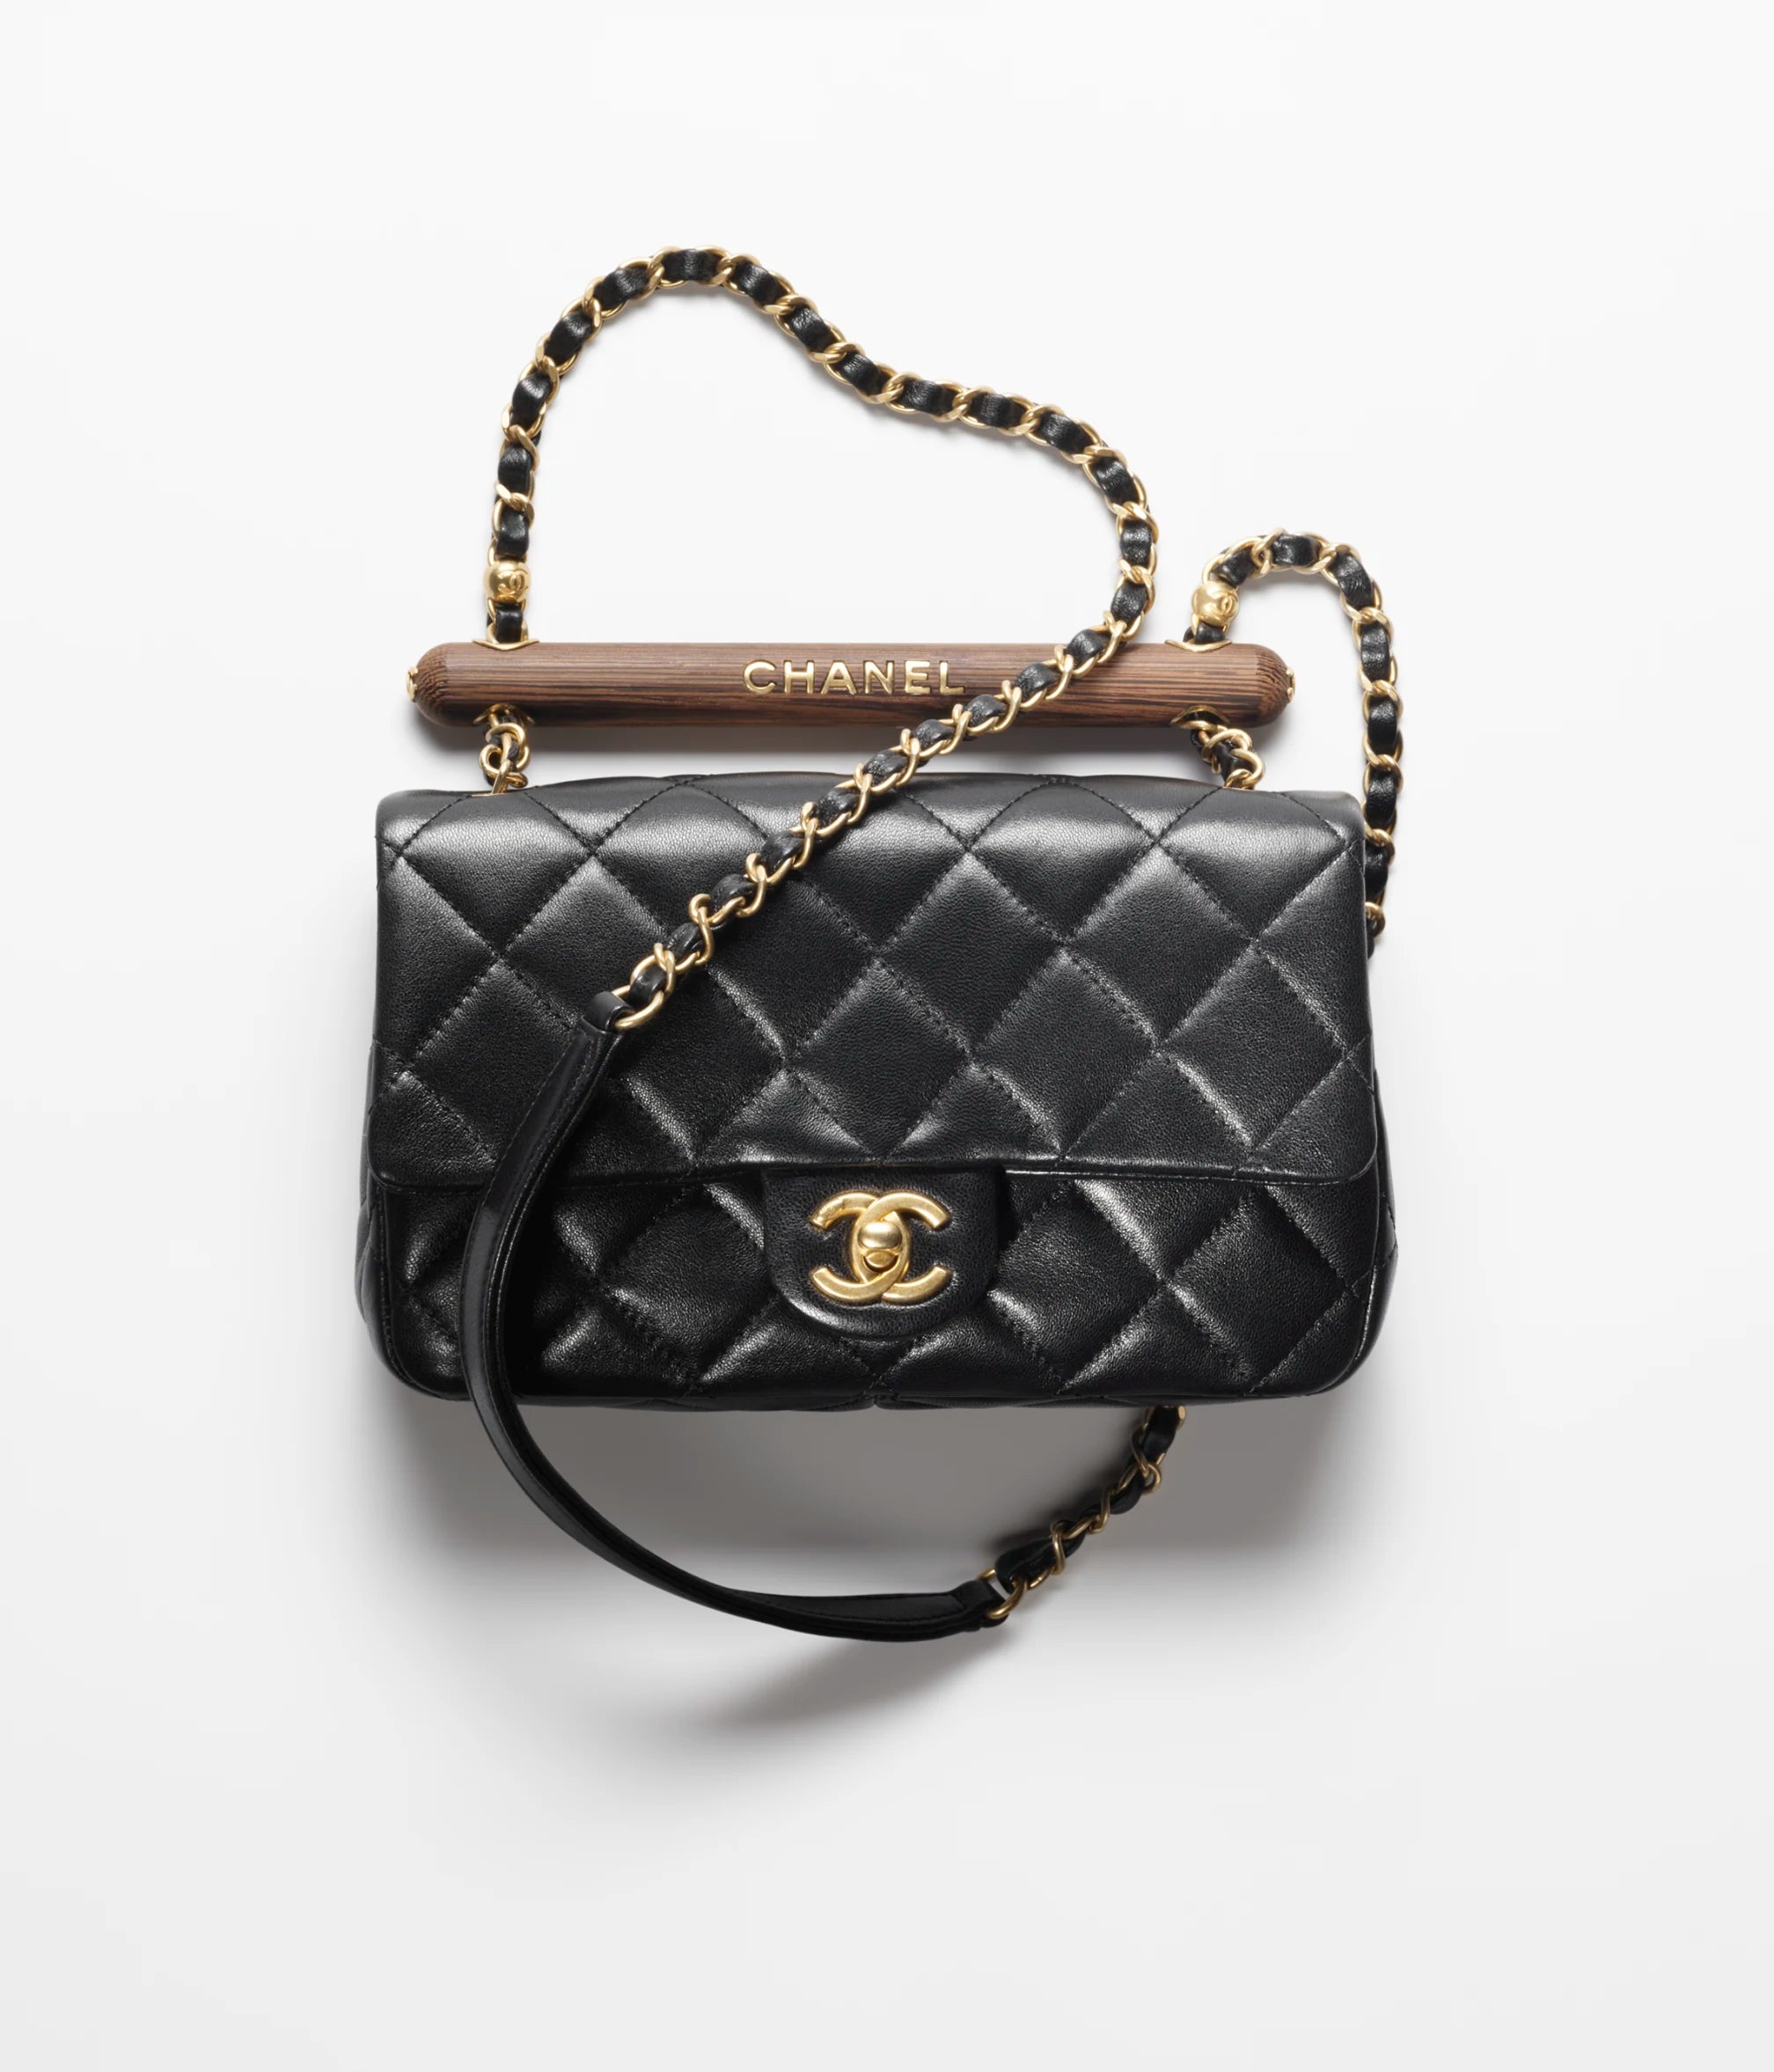 Chanel's New Campaign Celebrates an Icon